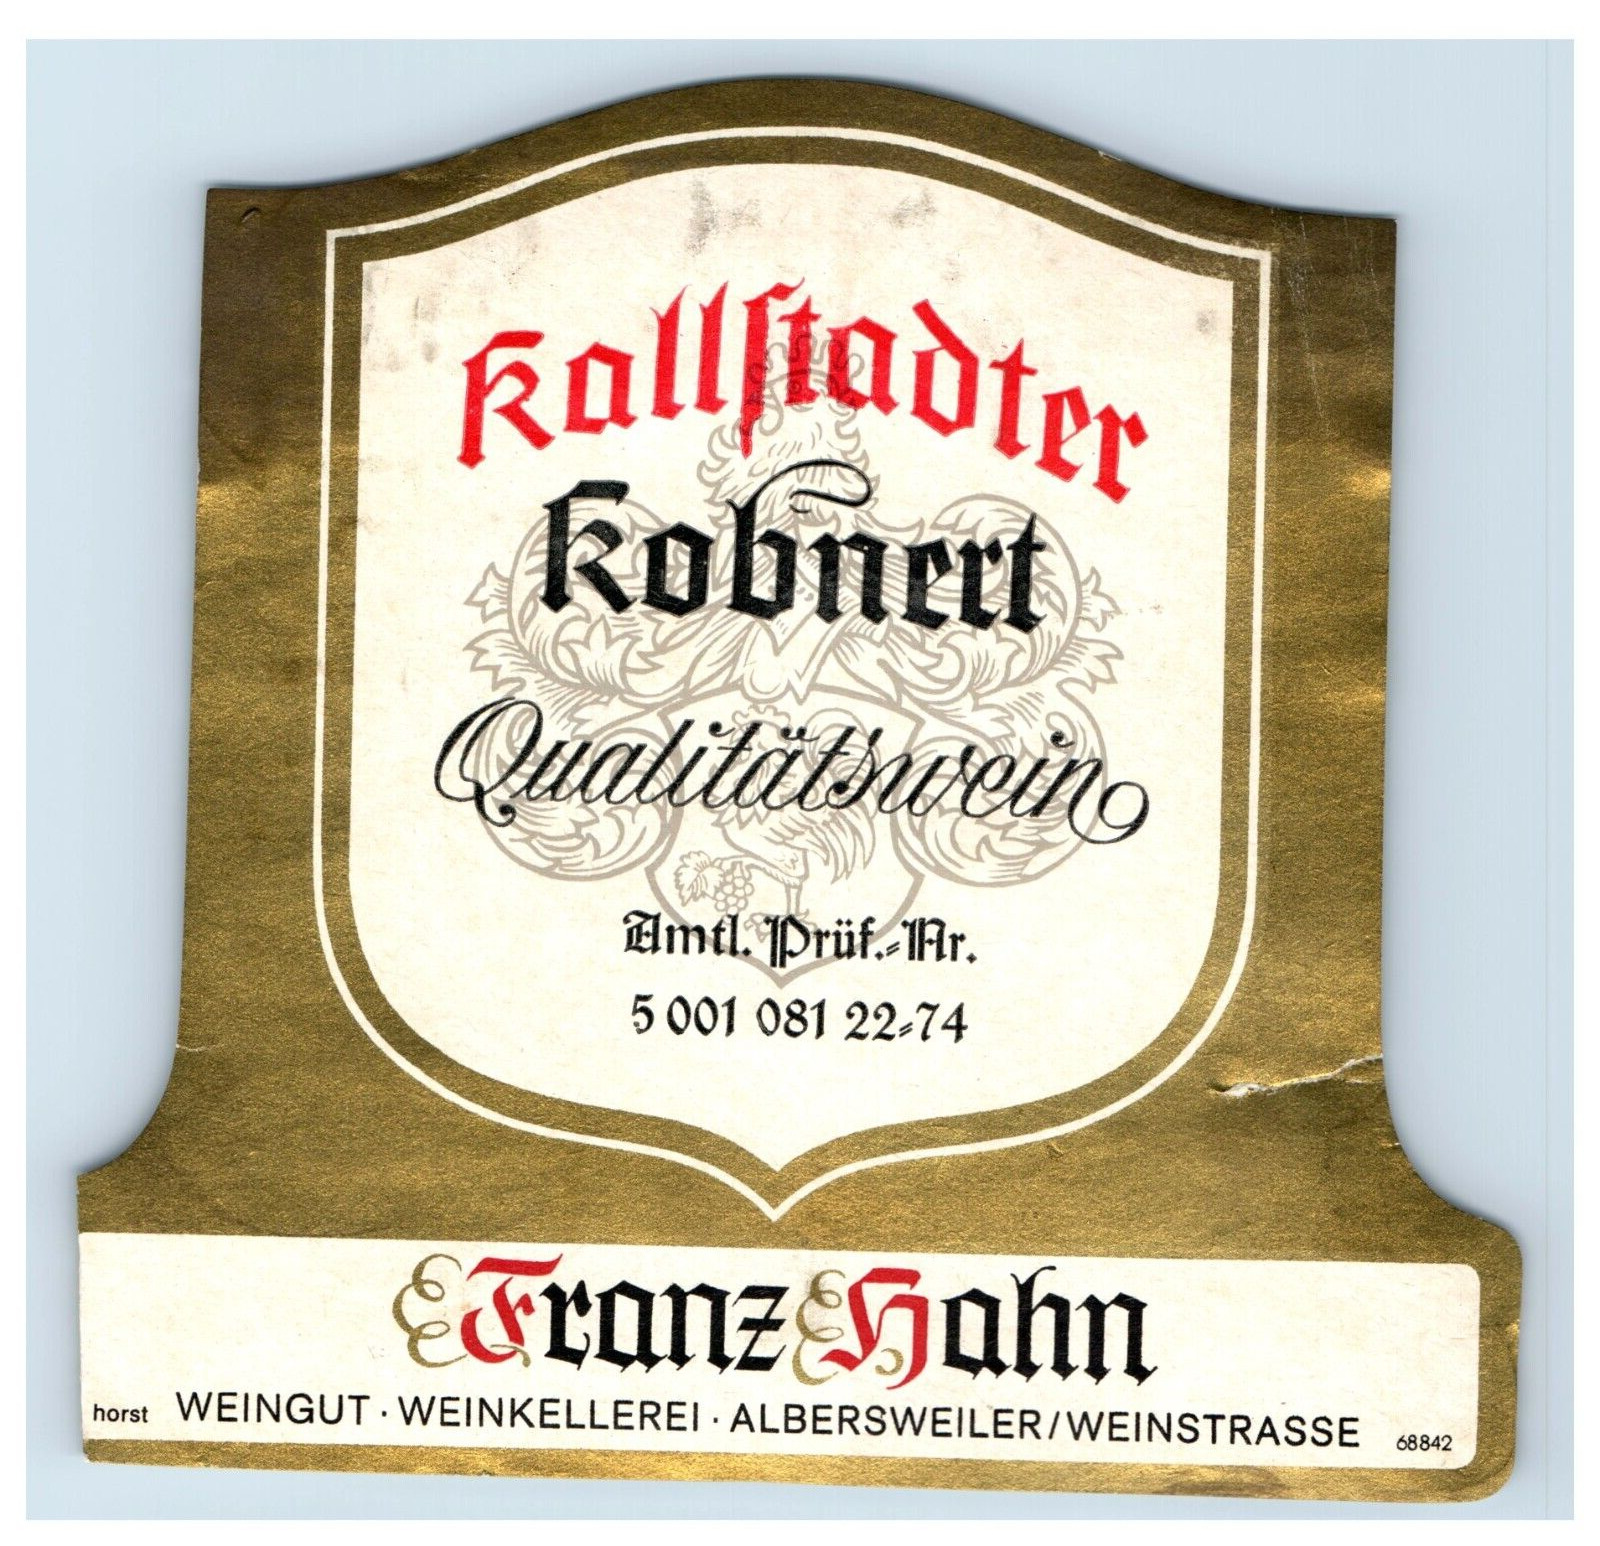 1970\'s-80\'s Rallftadter Robnert Franz Hahn German Wine Label Original S33E